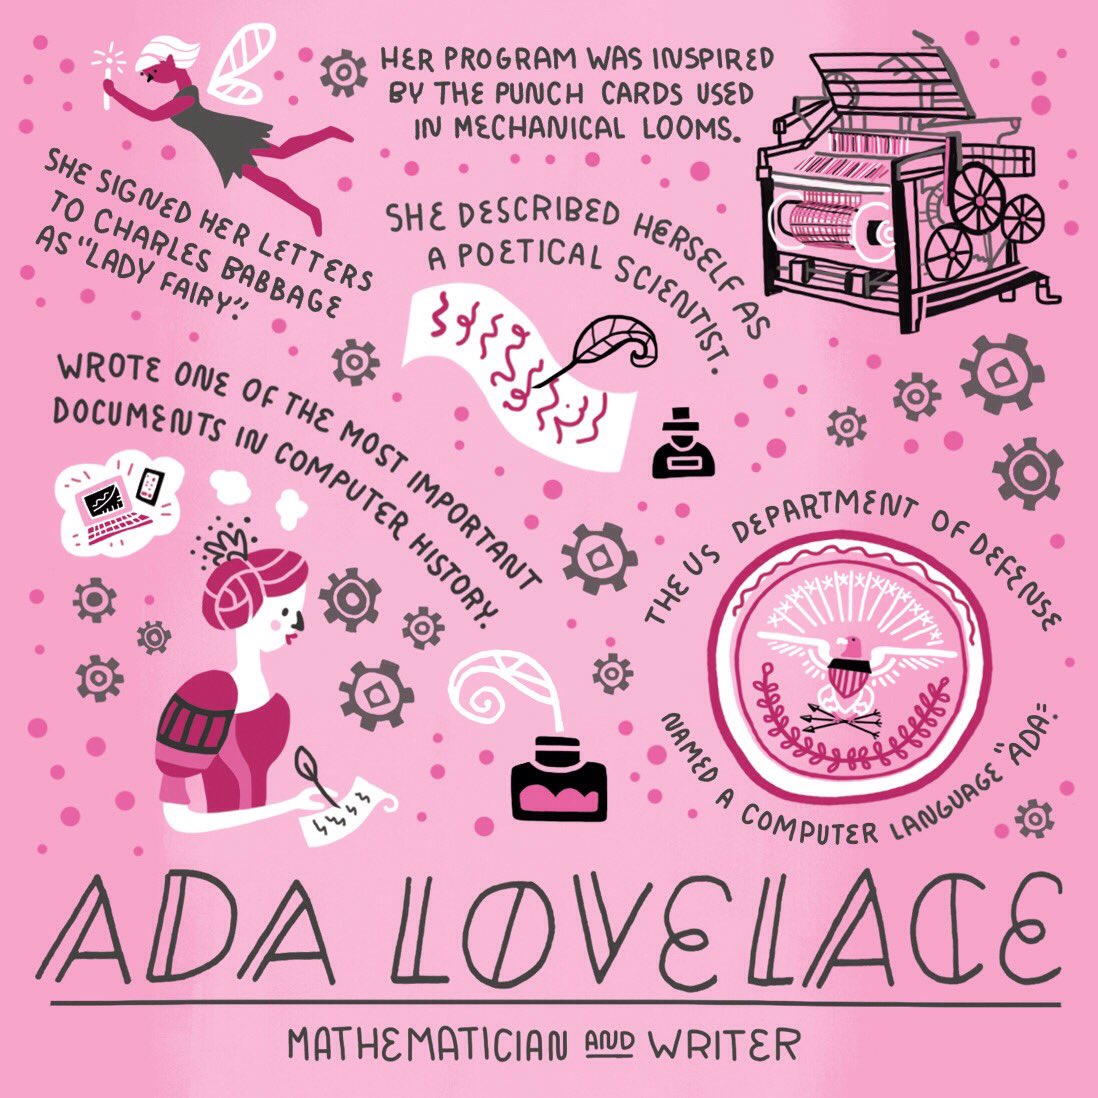 Happy #AdaLovelaceDay everyone! https://t.co/Kqb3W3csqb